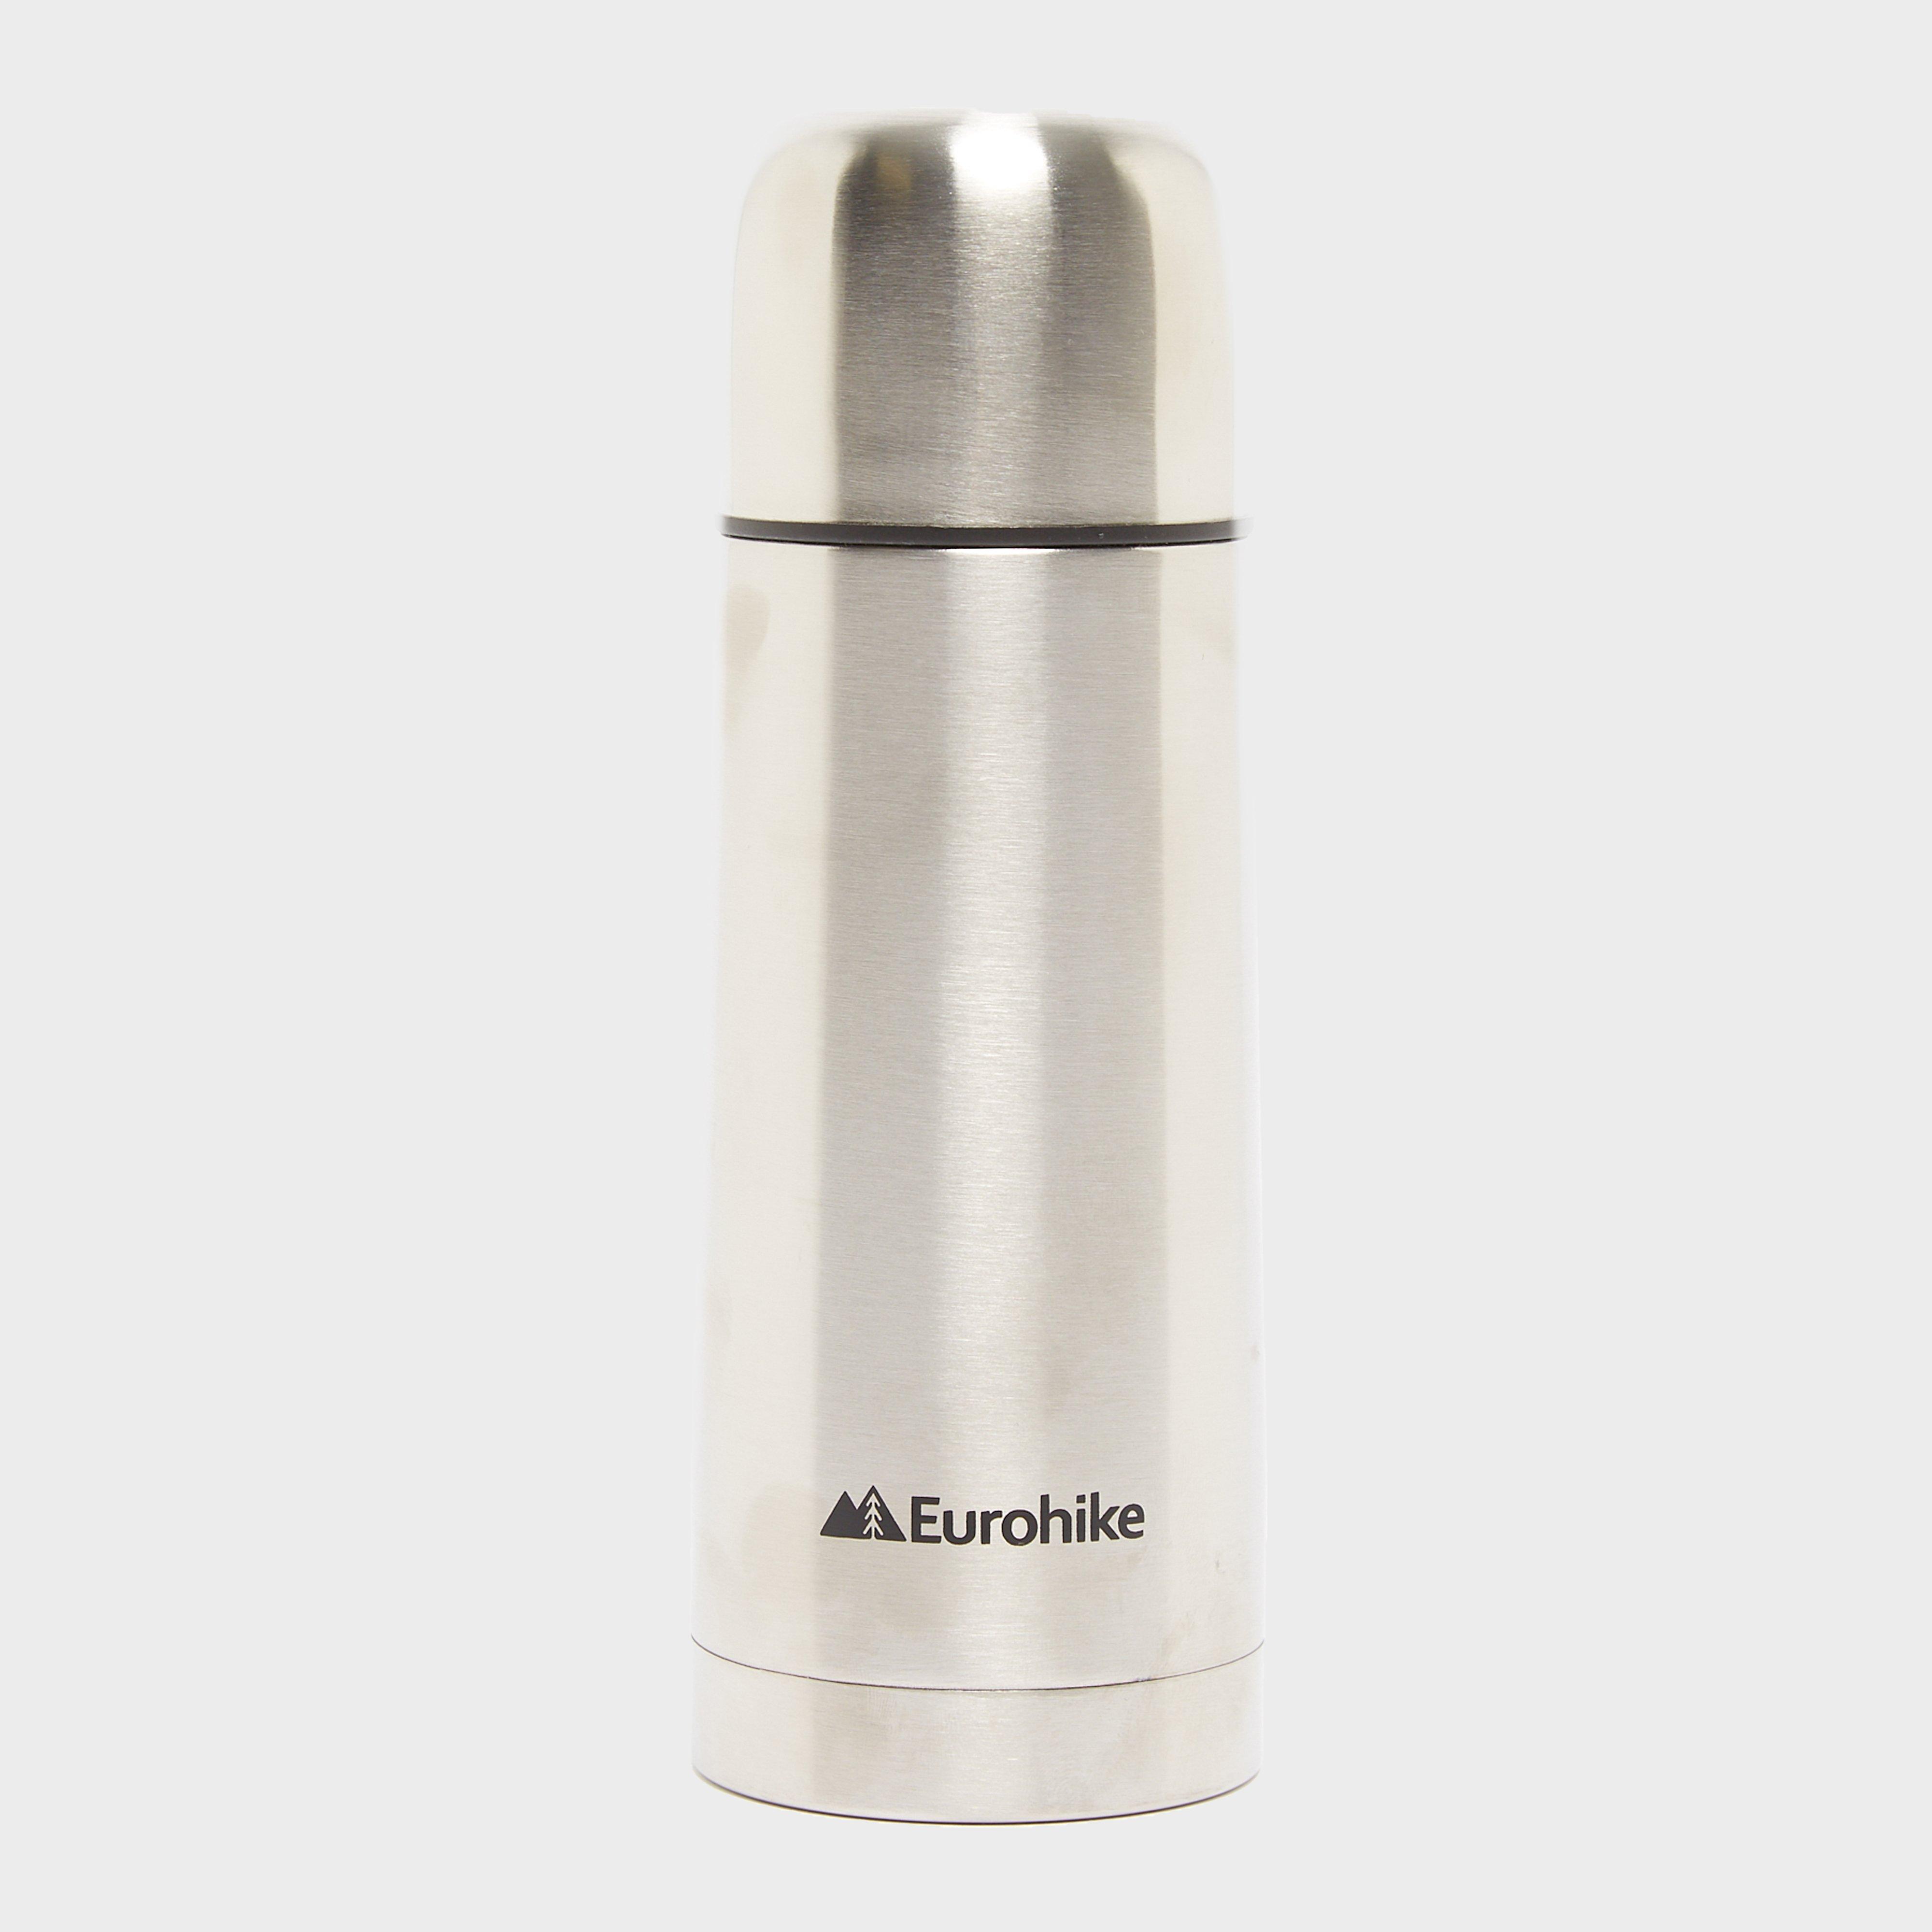 Eurohike Stainless Steel Flask 300ml - Silver/slv  Silver/slv